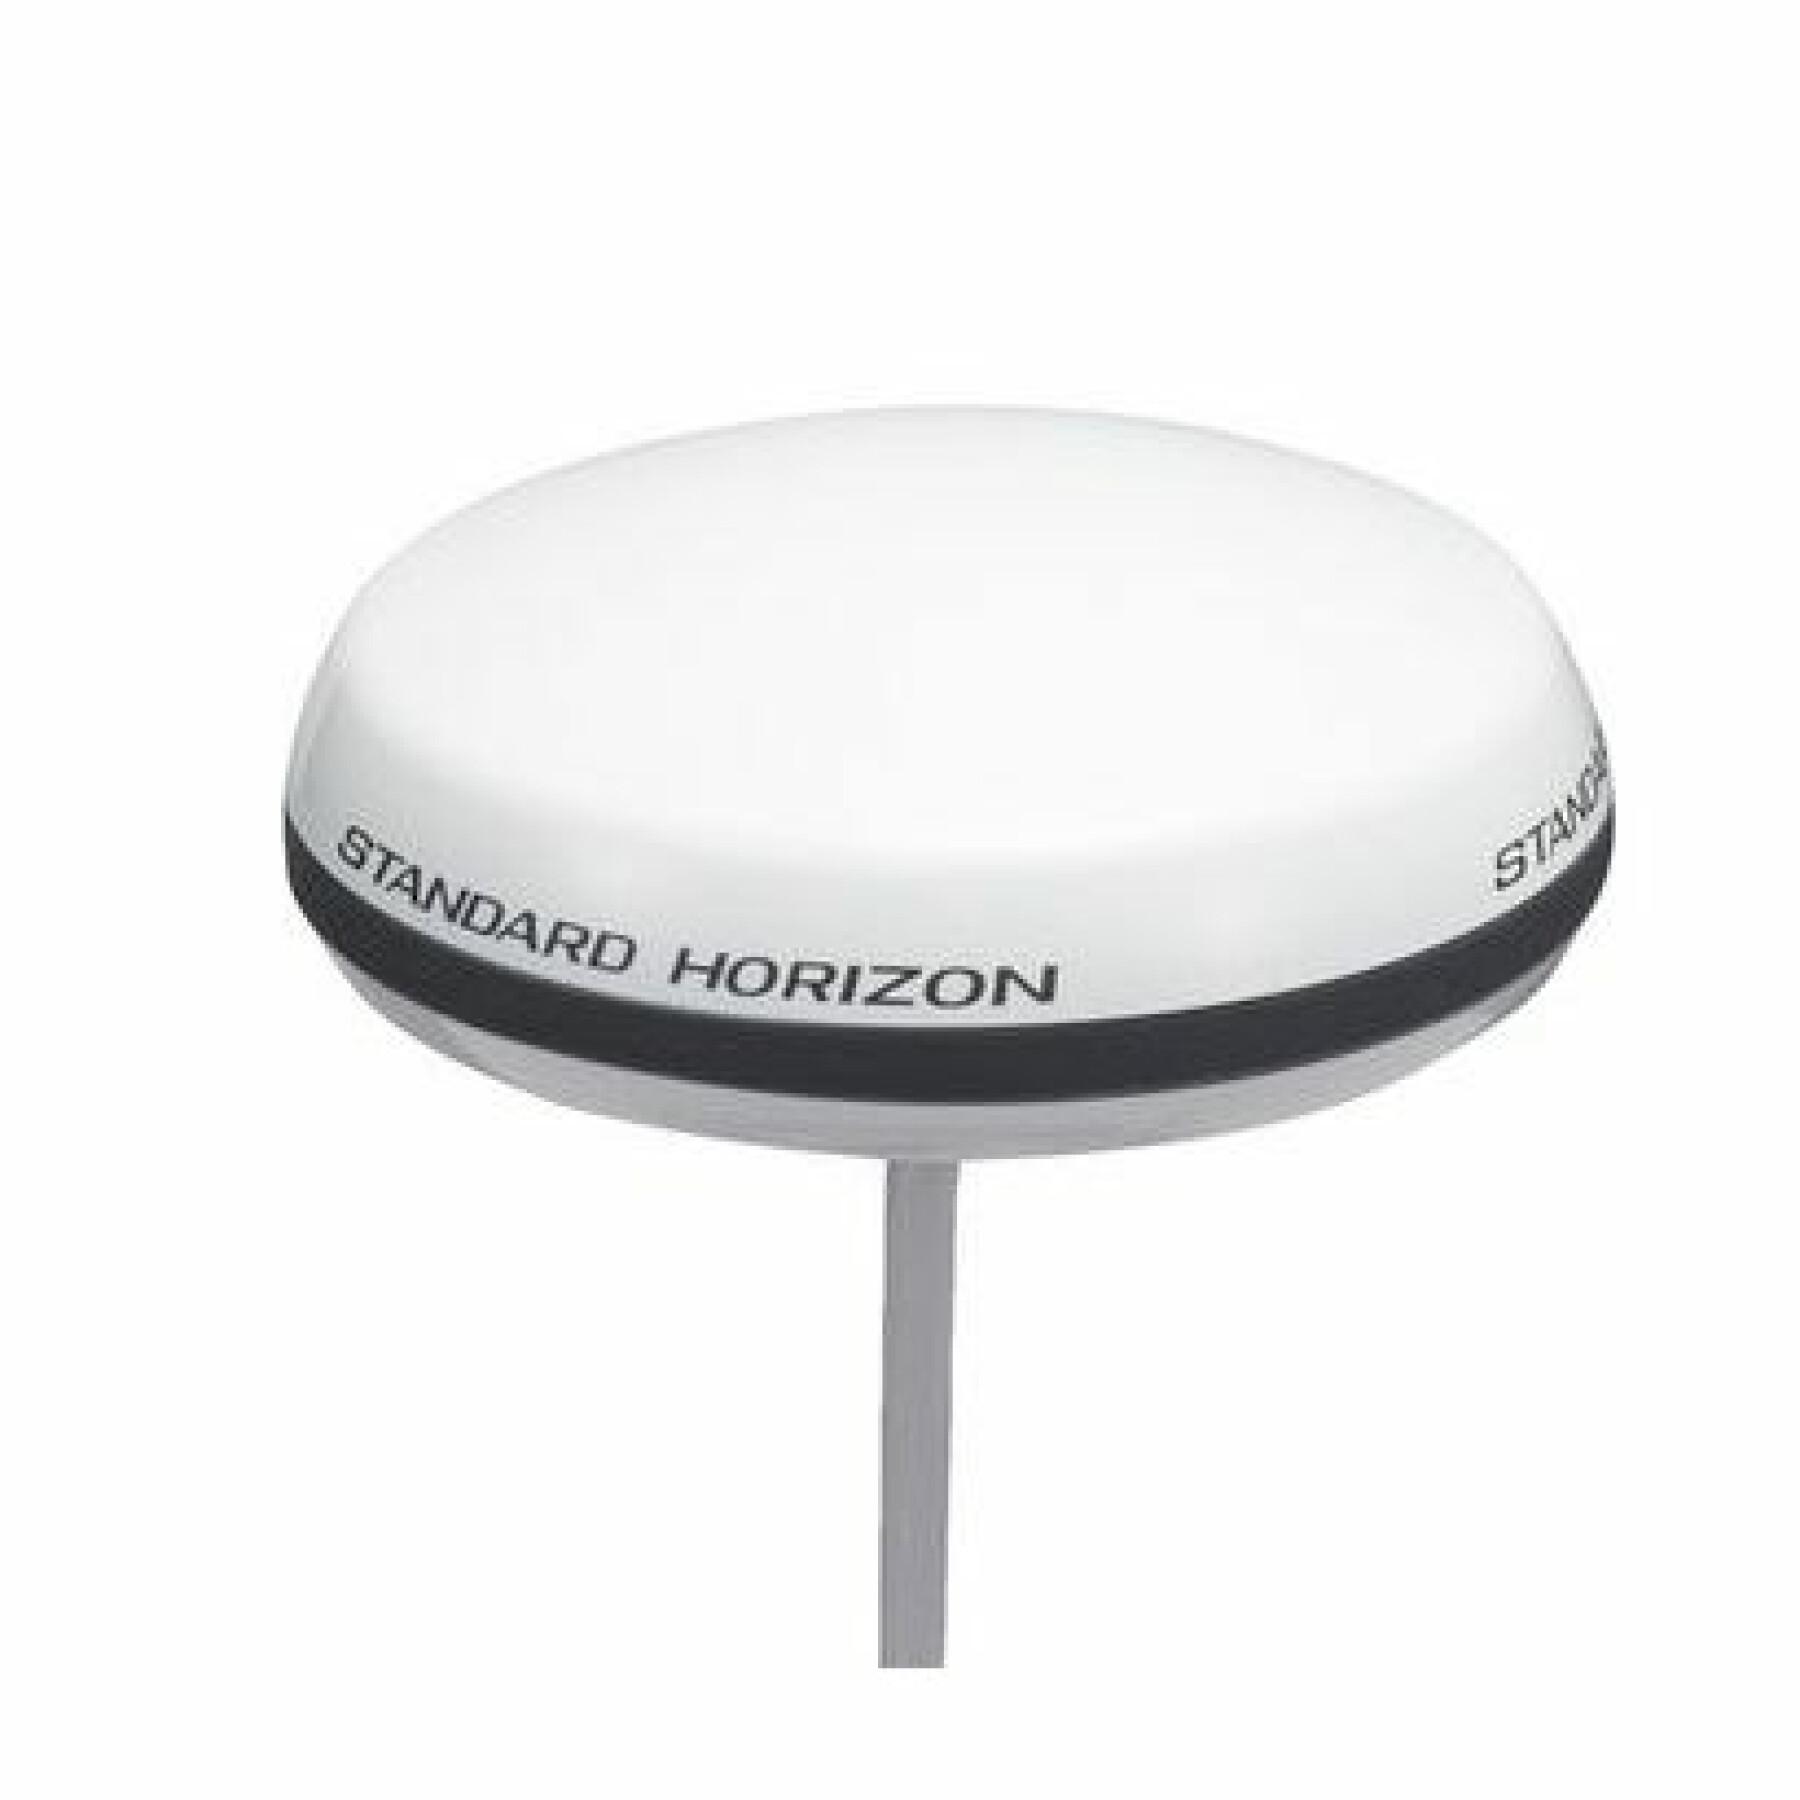 Externe Gps-Antenne 15 m Kabel für alle stationären Modelle Standard Horizon